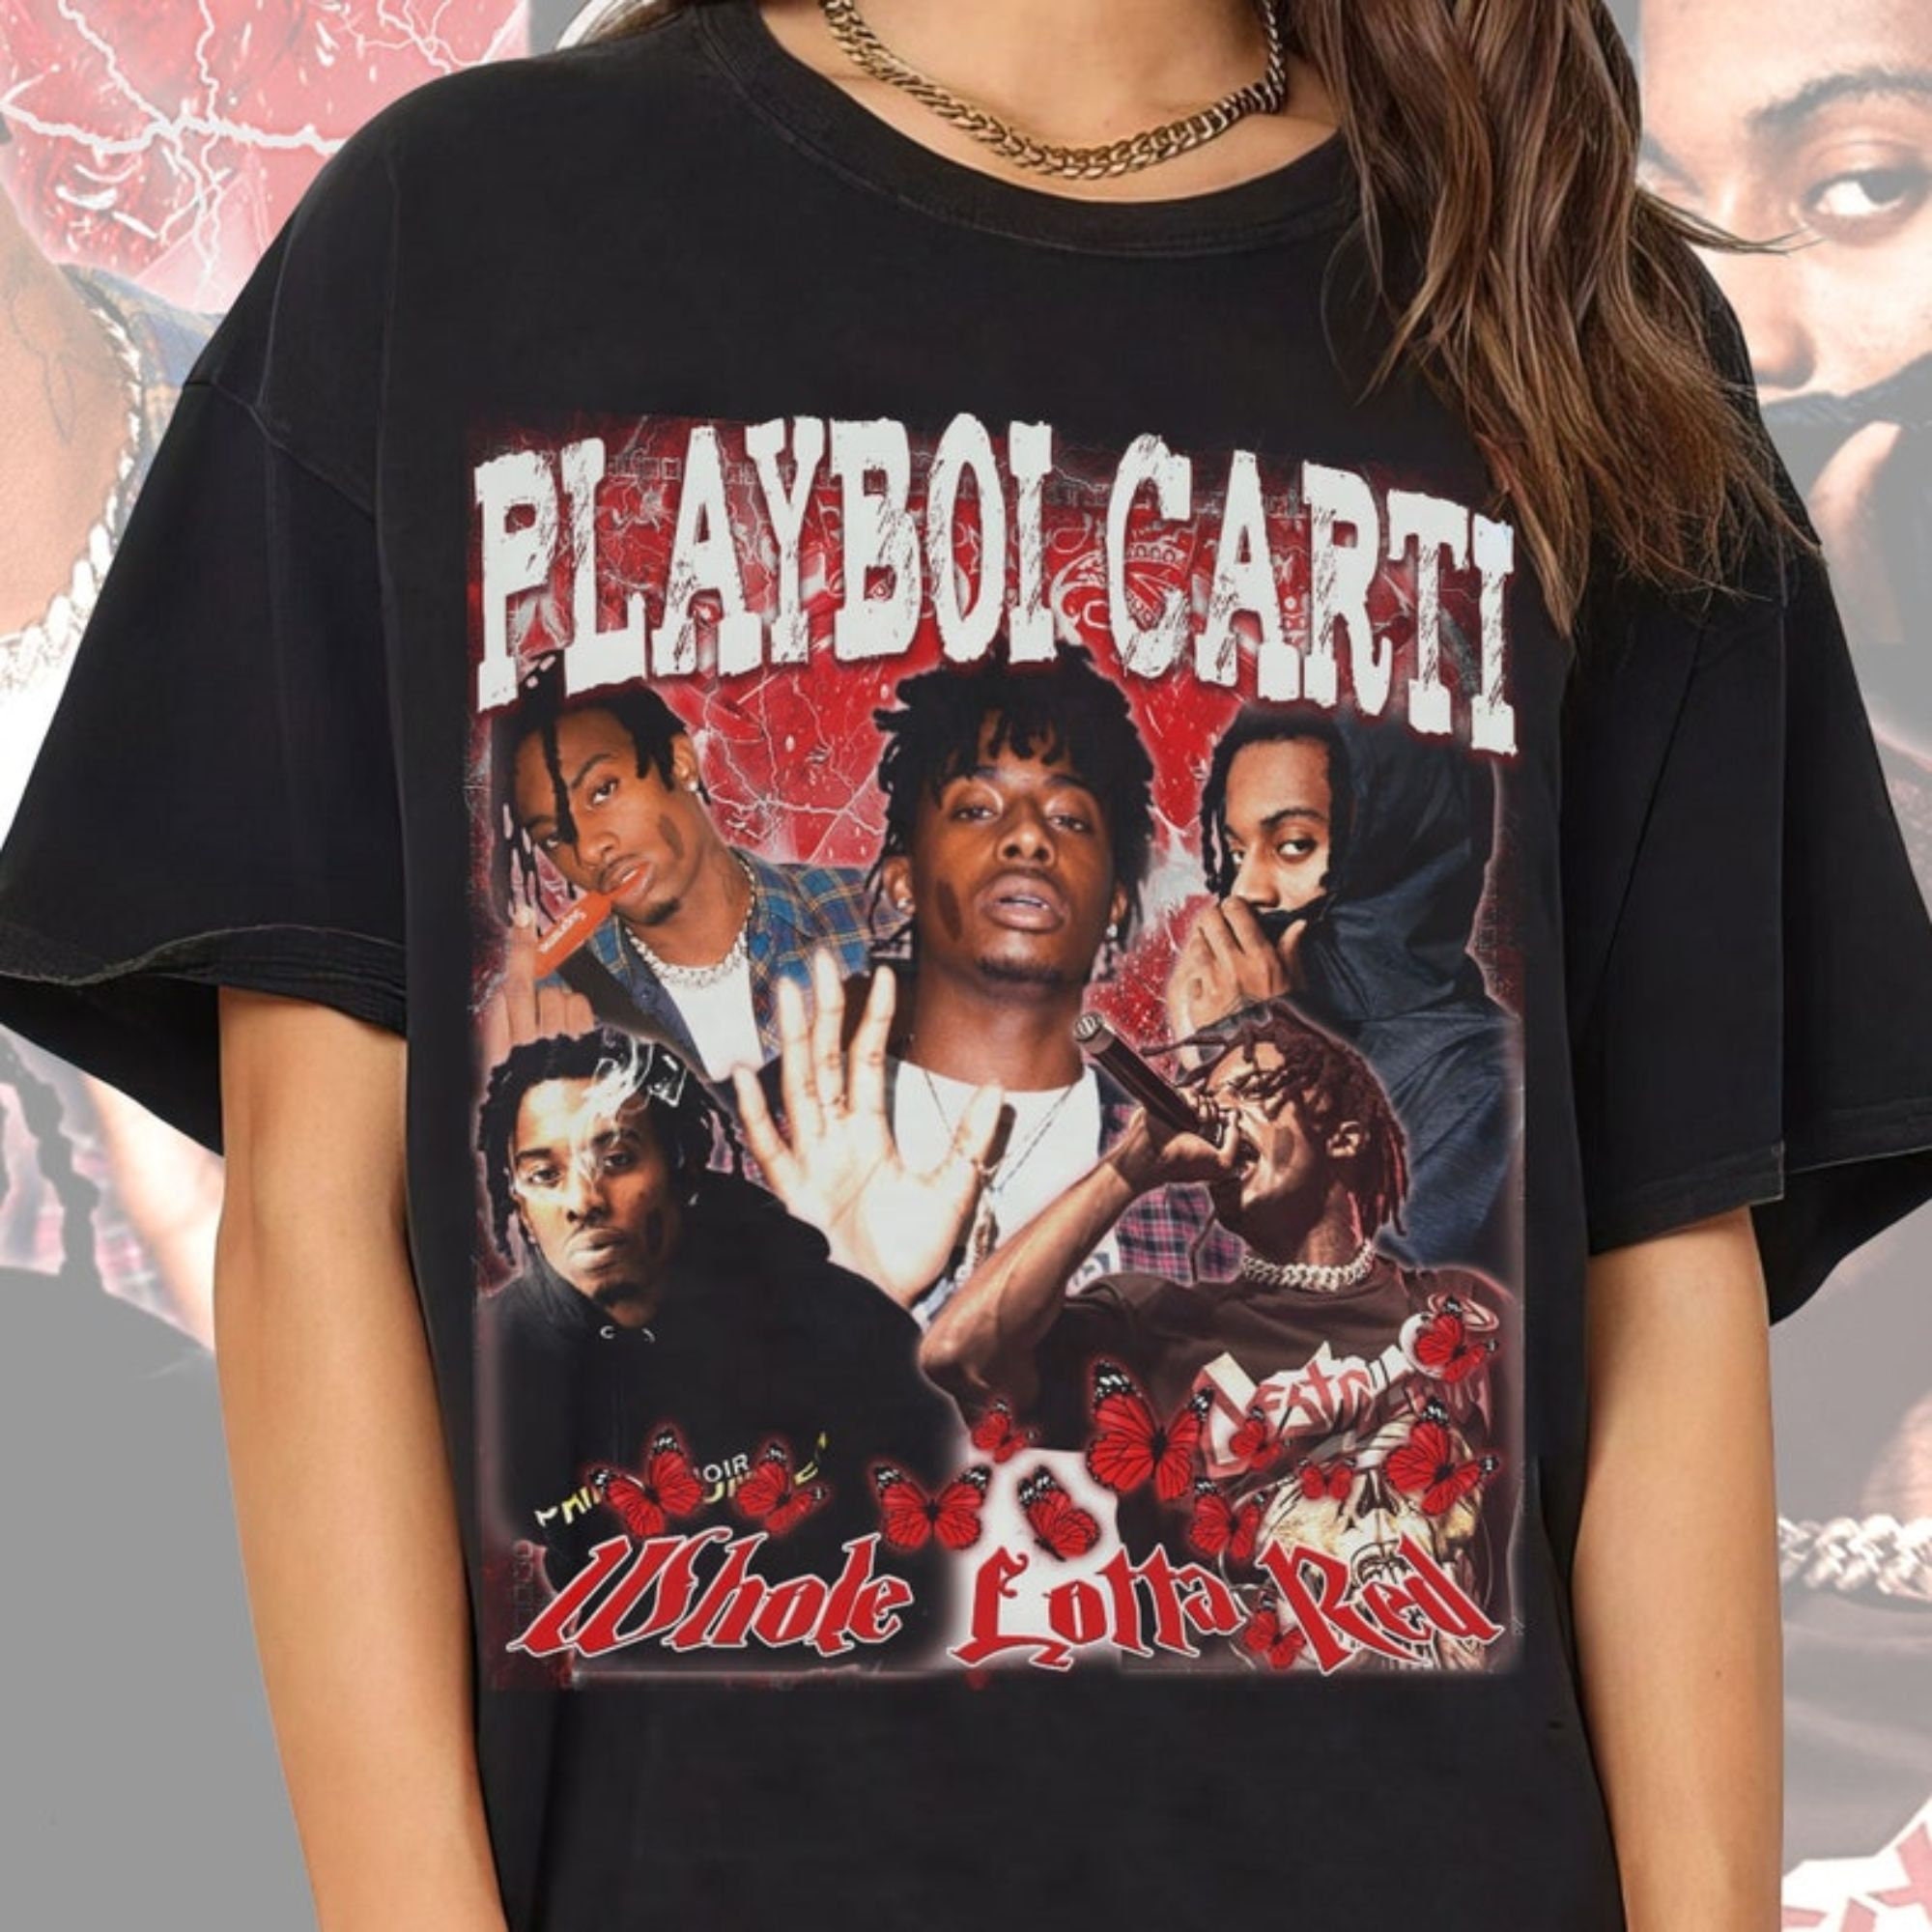 Playboi Carti Rockstar Made Heavy Cotton Rep Tee Shirt MD 